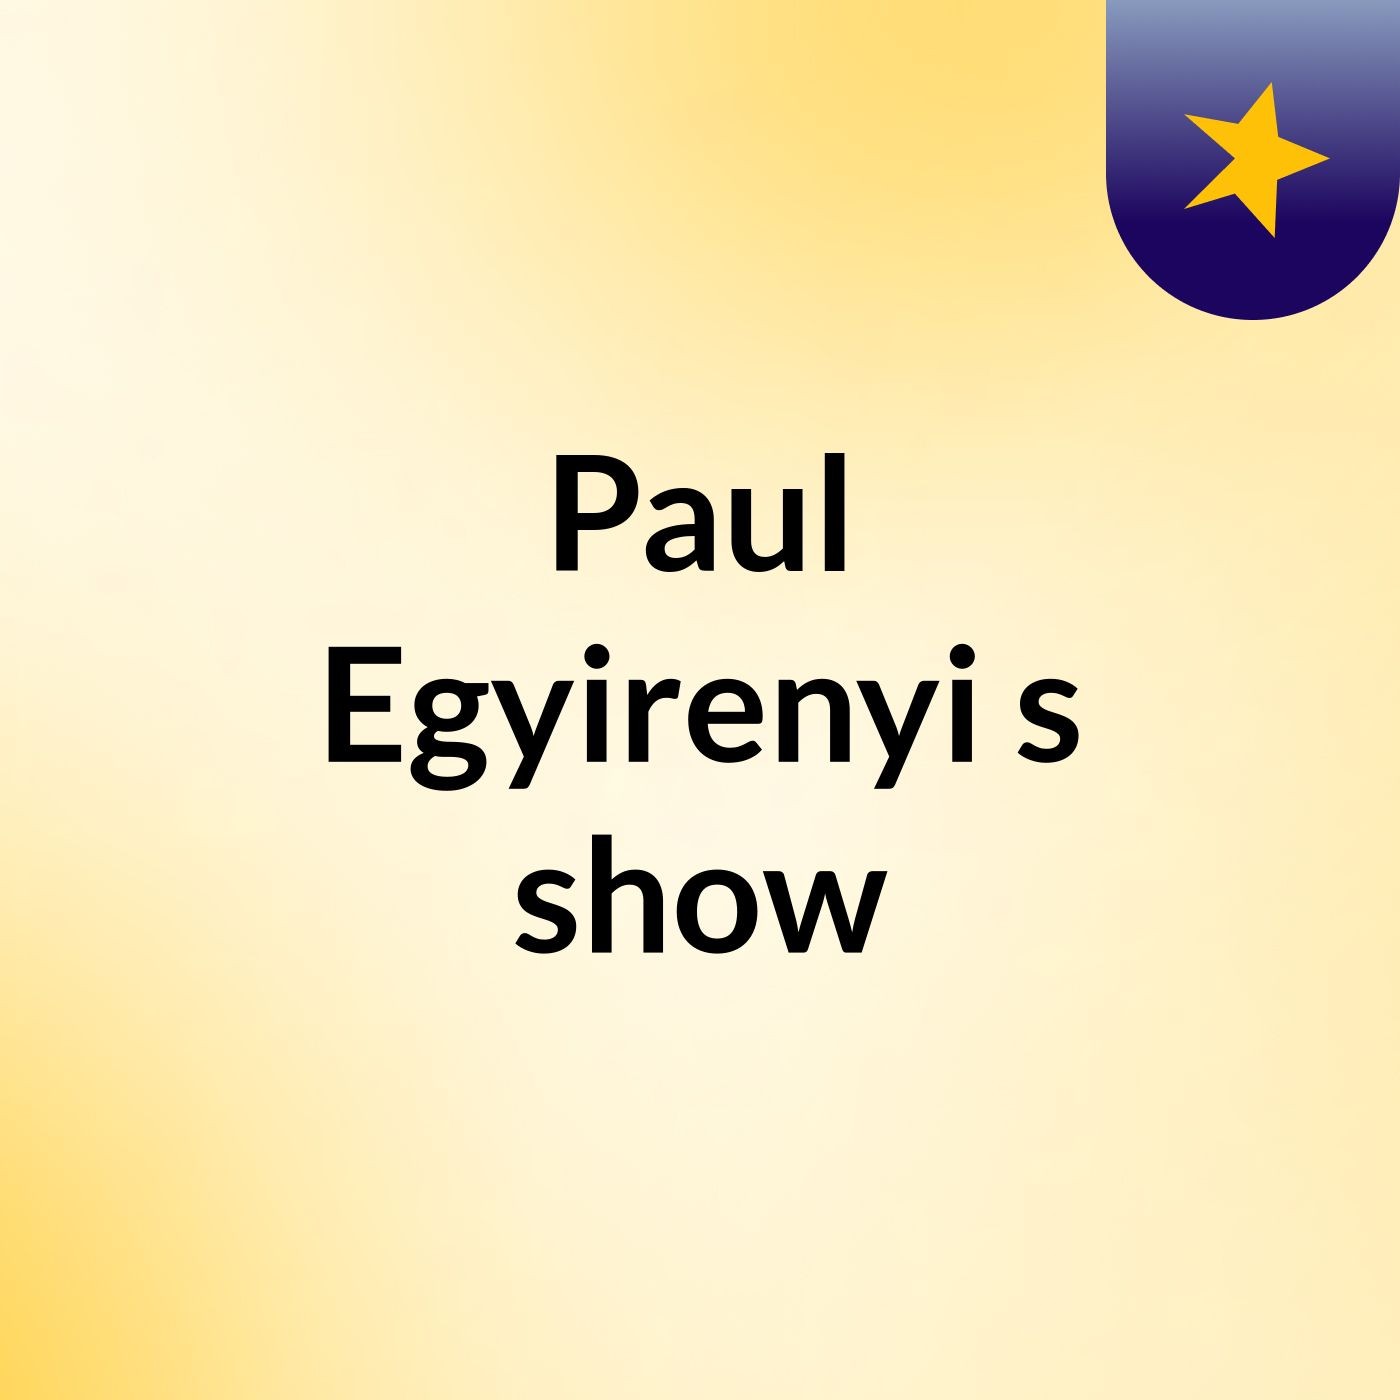 Paul Egyirenyi's show